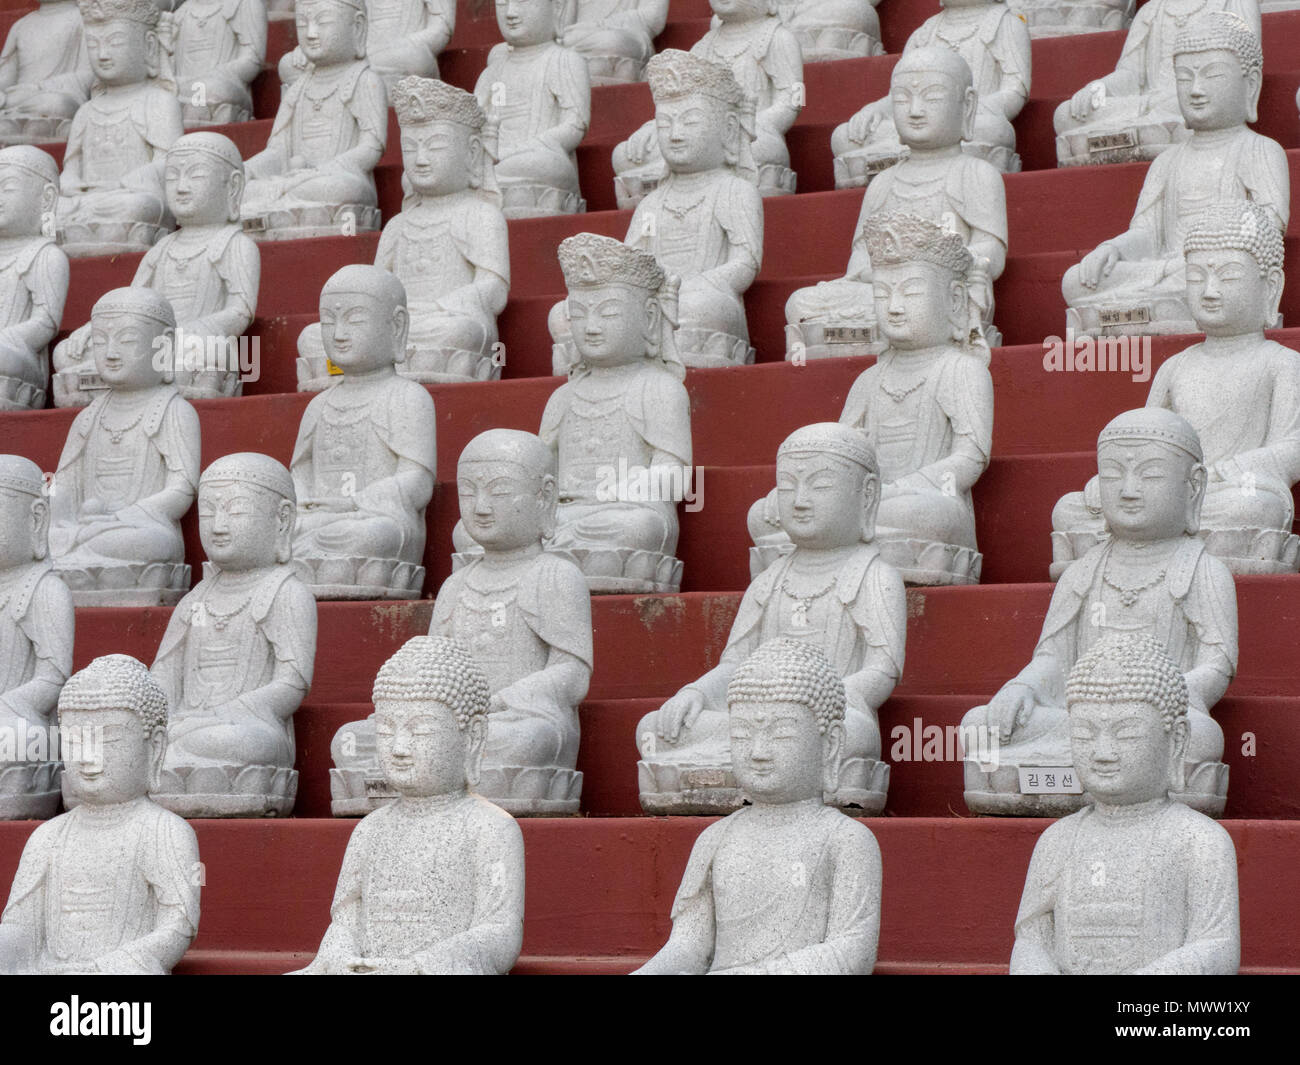 Religious statue in korea Stock Photo